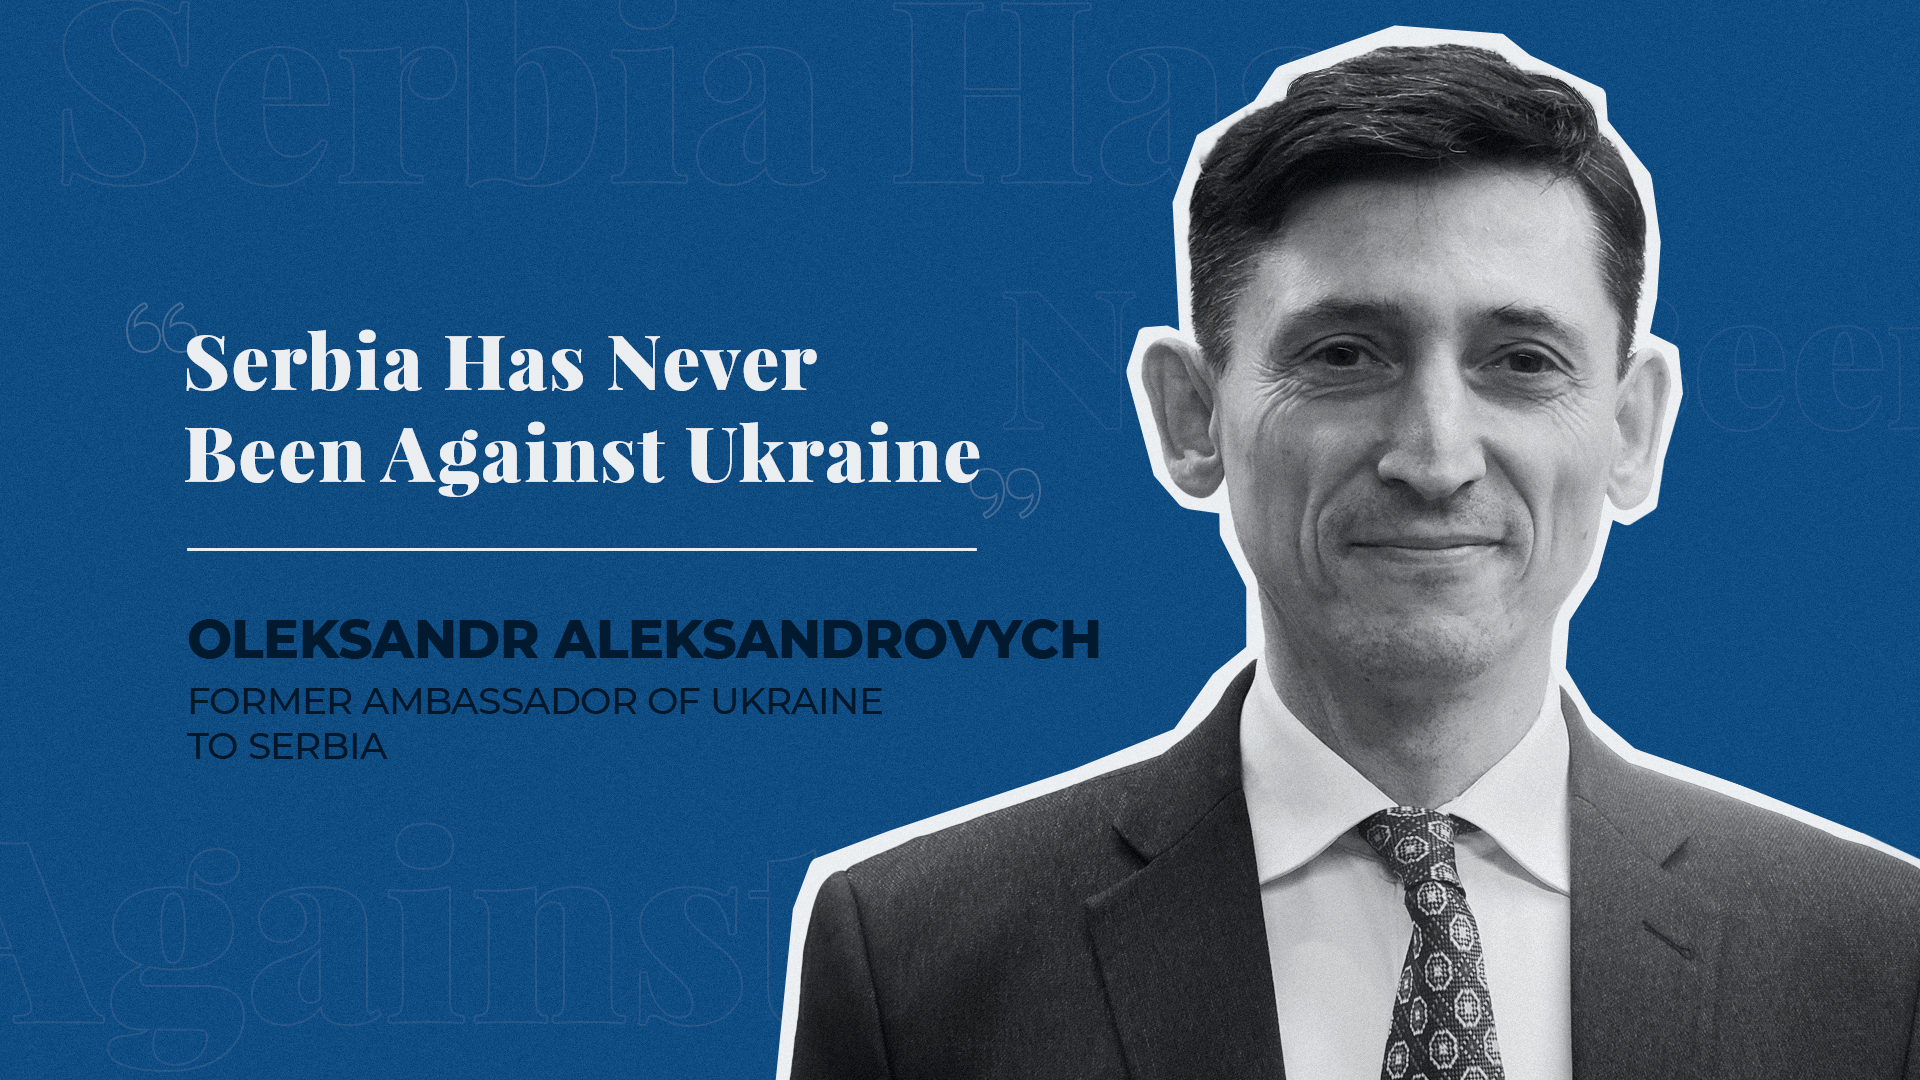 'Serbia Has Never Been Against Ukraine' – Former Ambassador